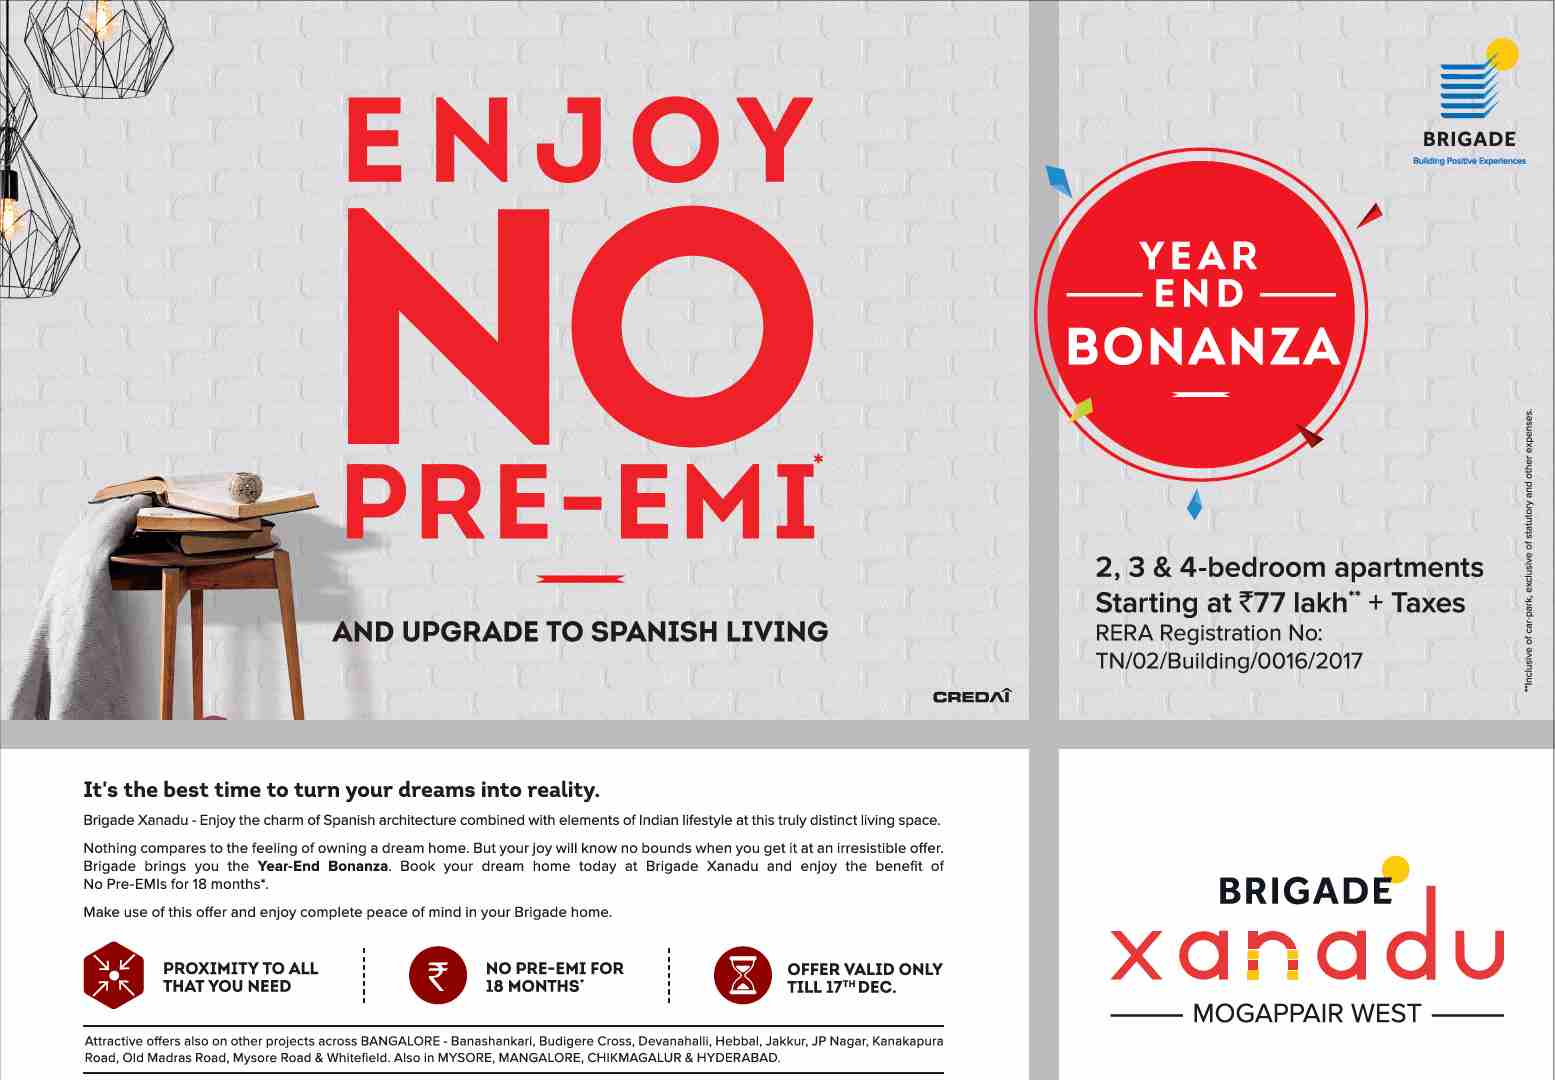 Enjoy no pre-EMI and upgrade to Spanish living during Year End Bonanza offer at Brigade Xanadu in Chennai